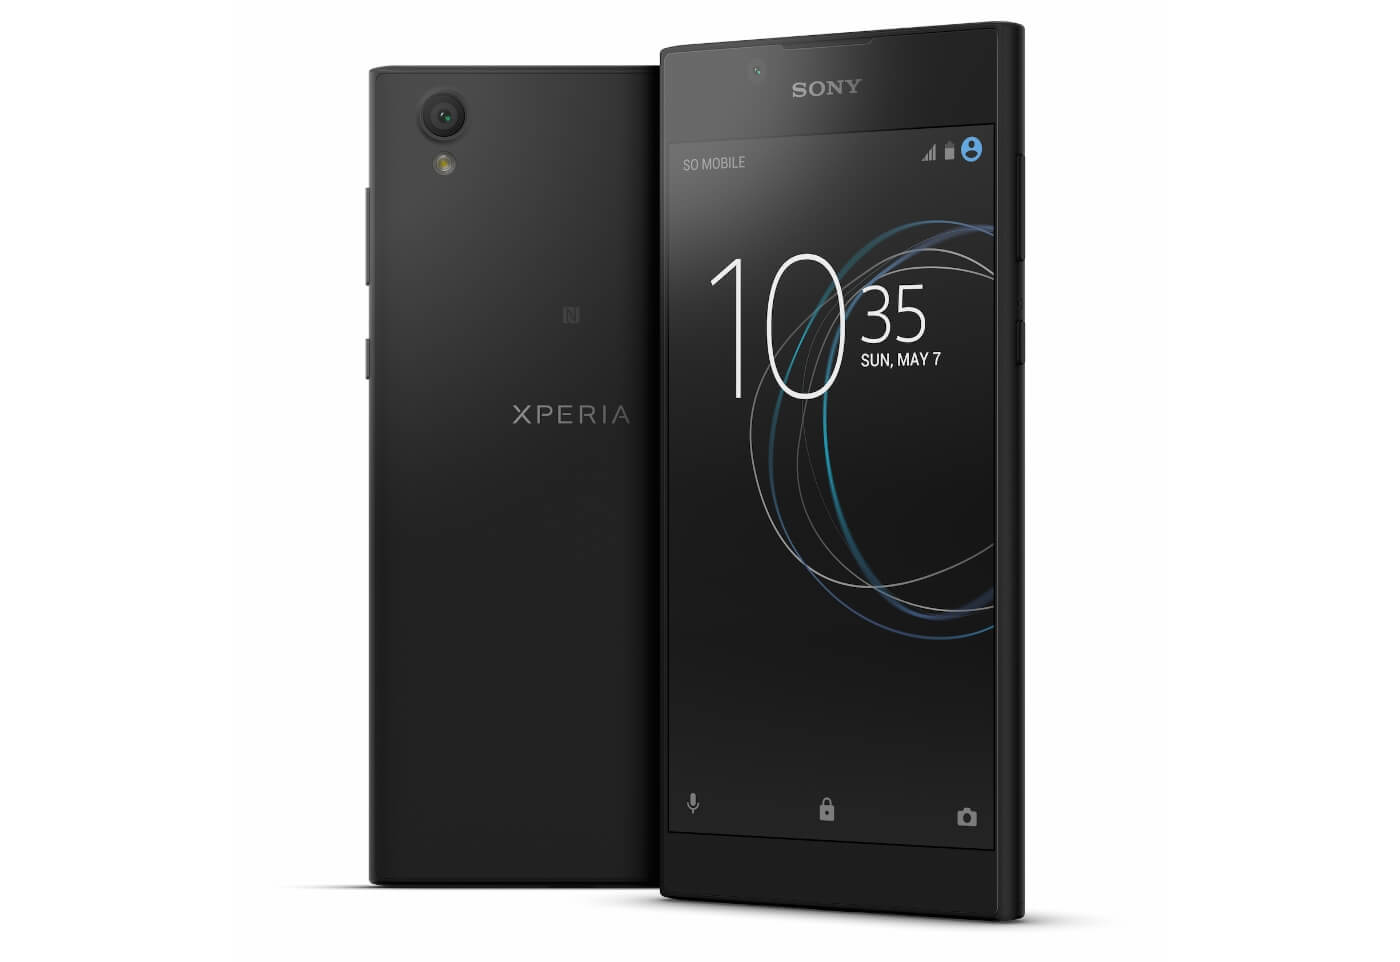 Недорогой смартфон Sony Xperia L1 поступил в продажу